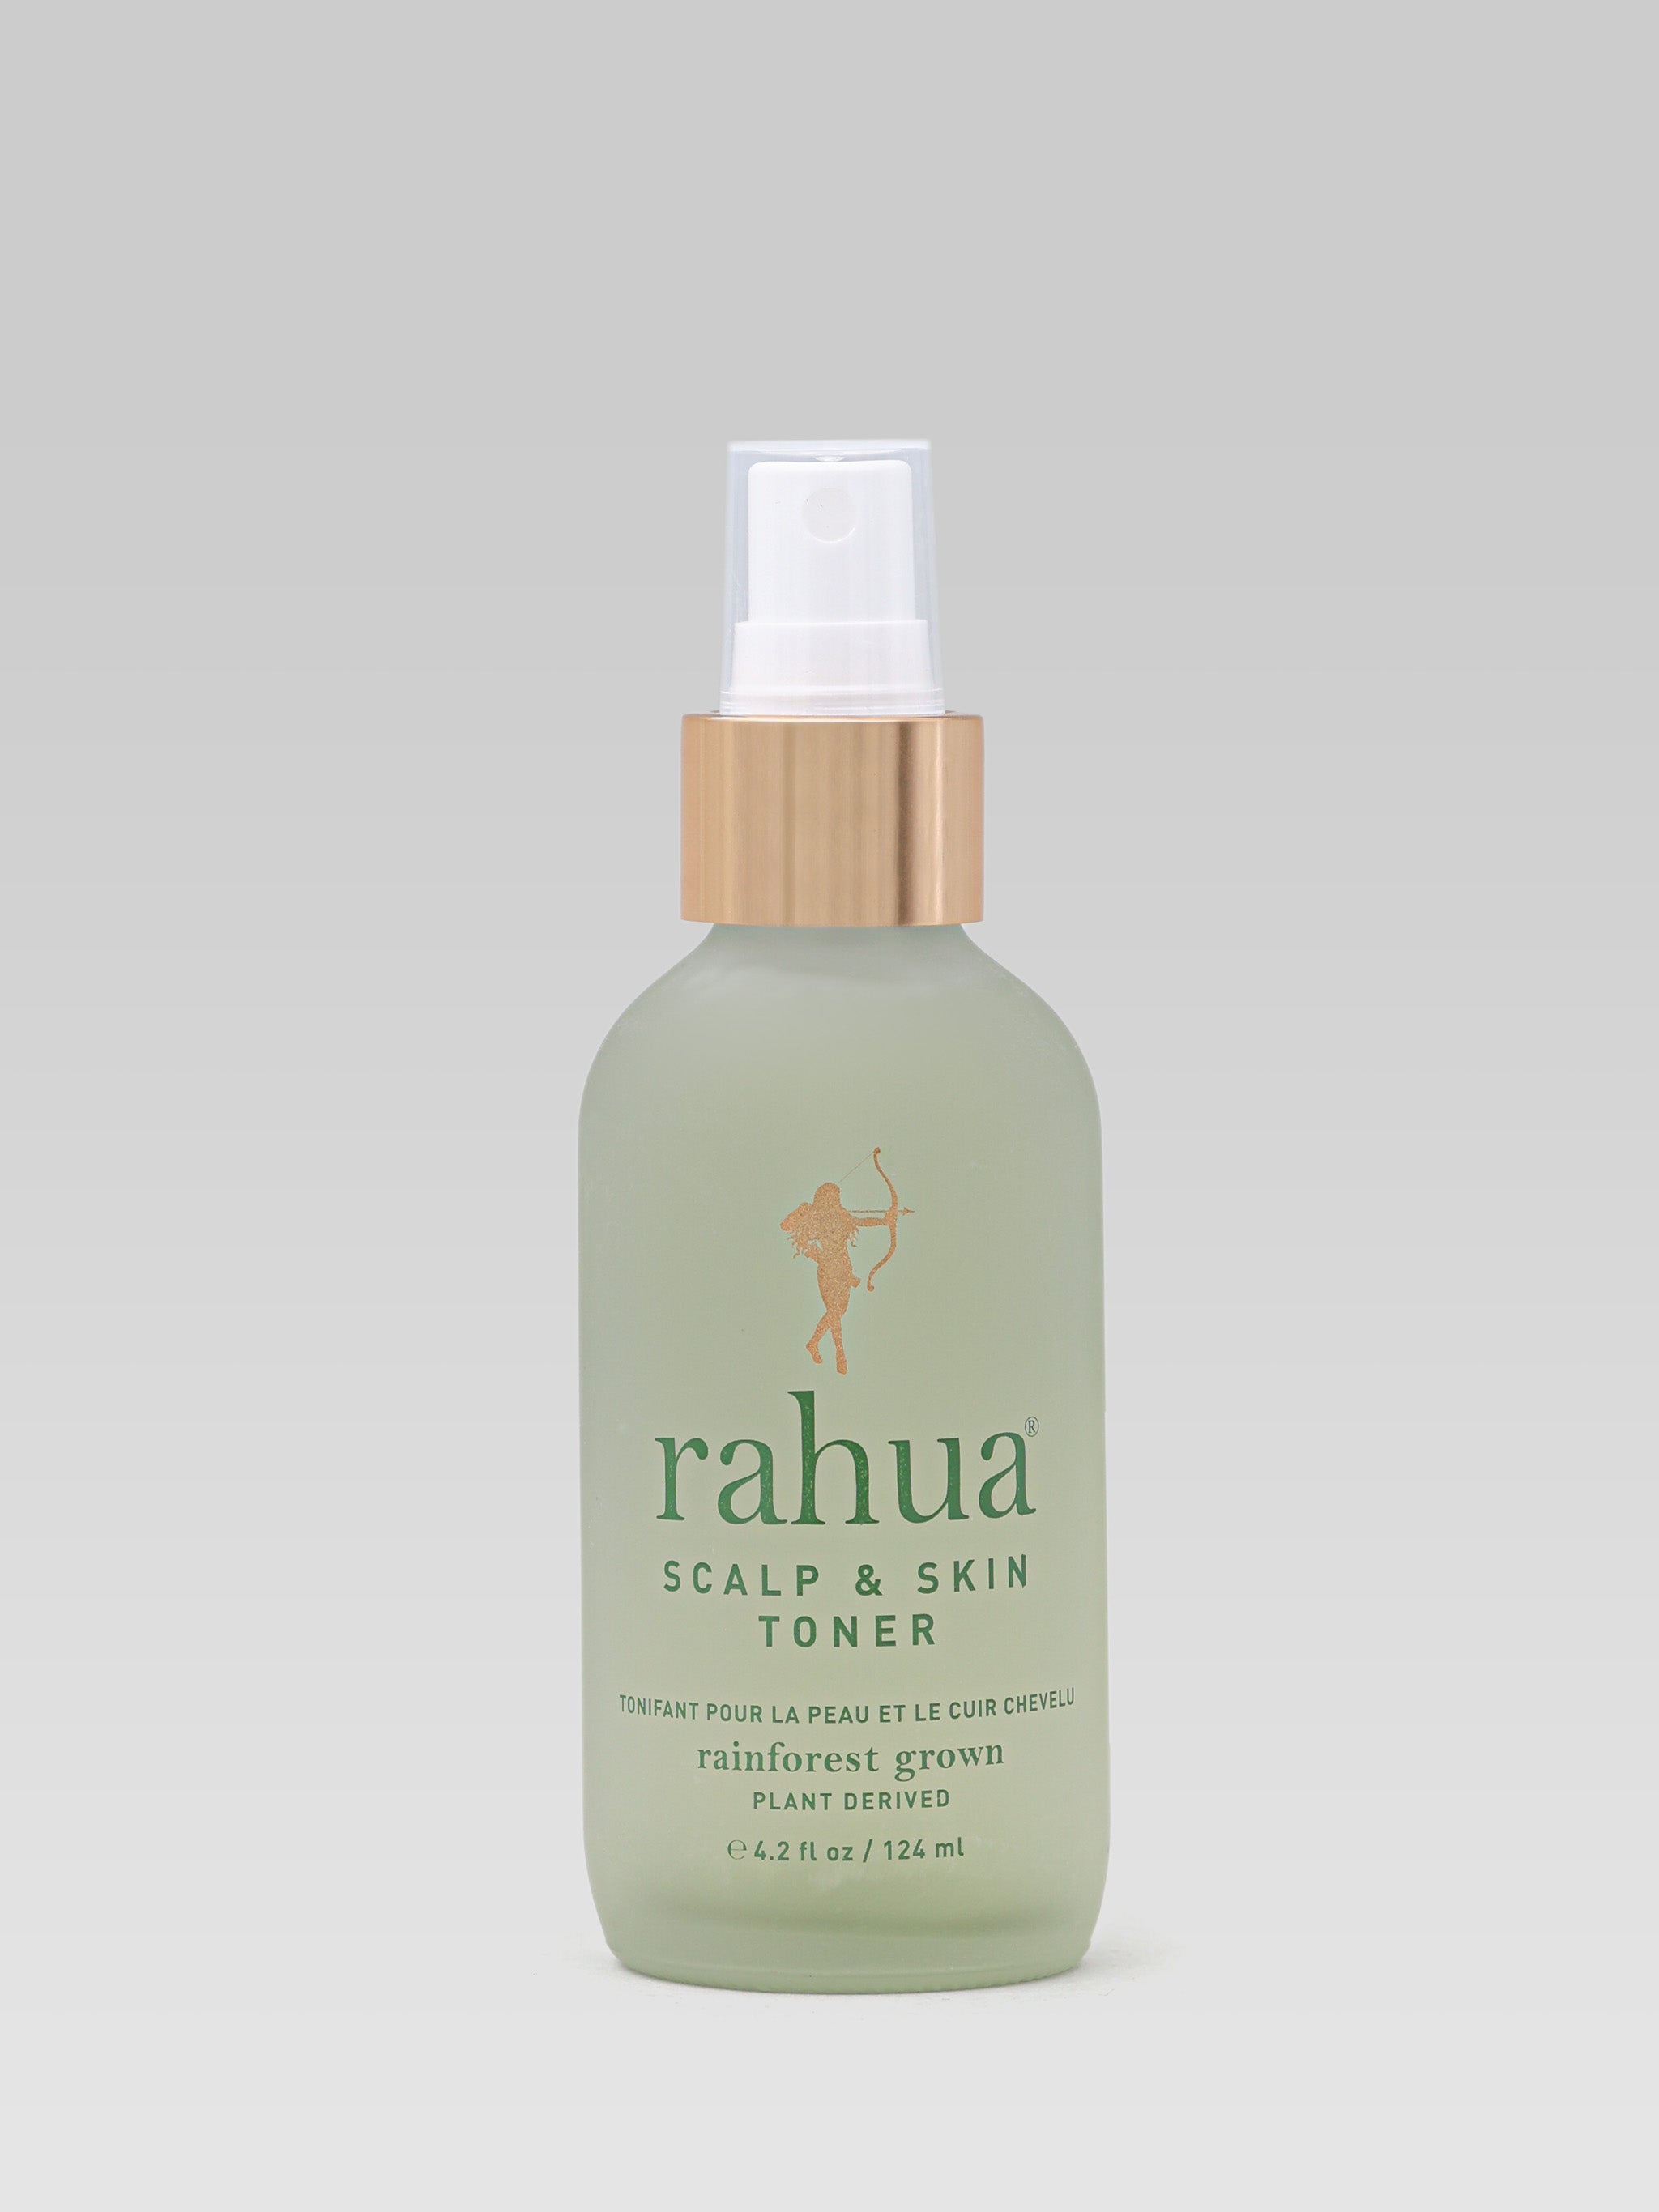 Rahua Scalp and Skin Toner product packaging